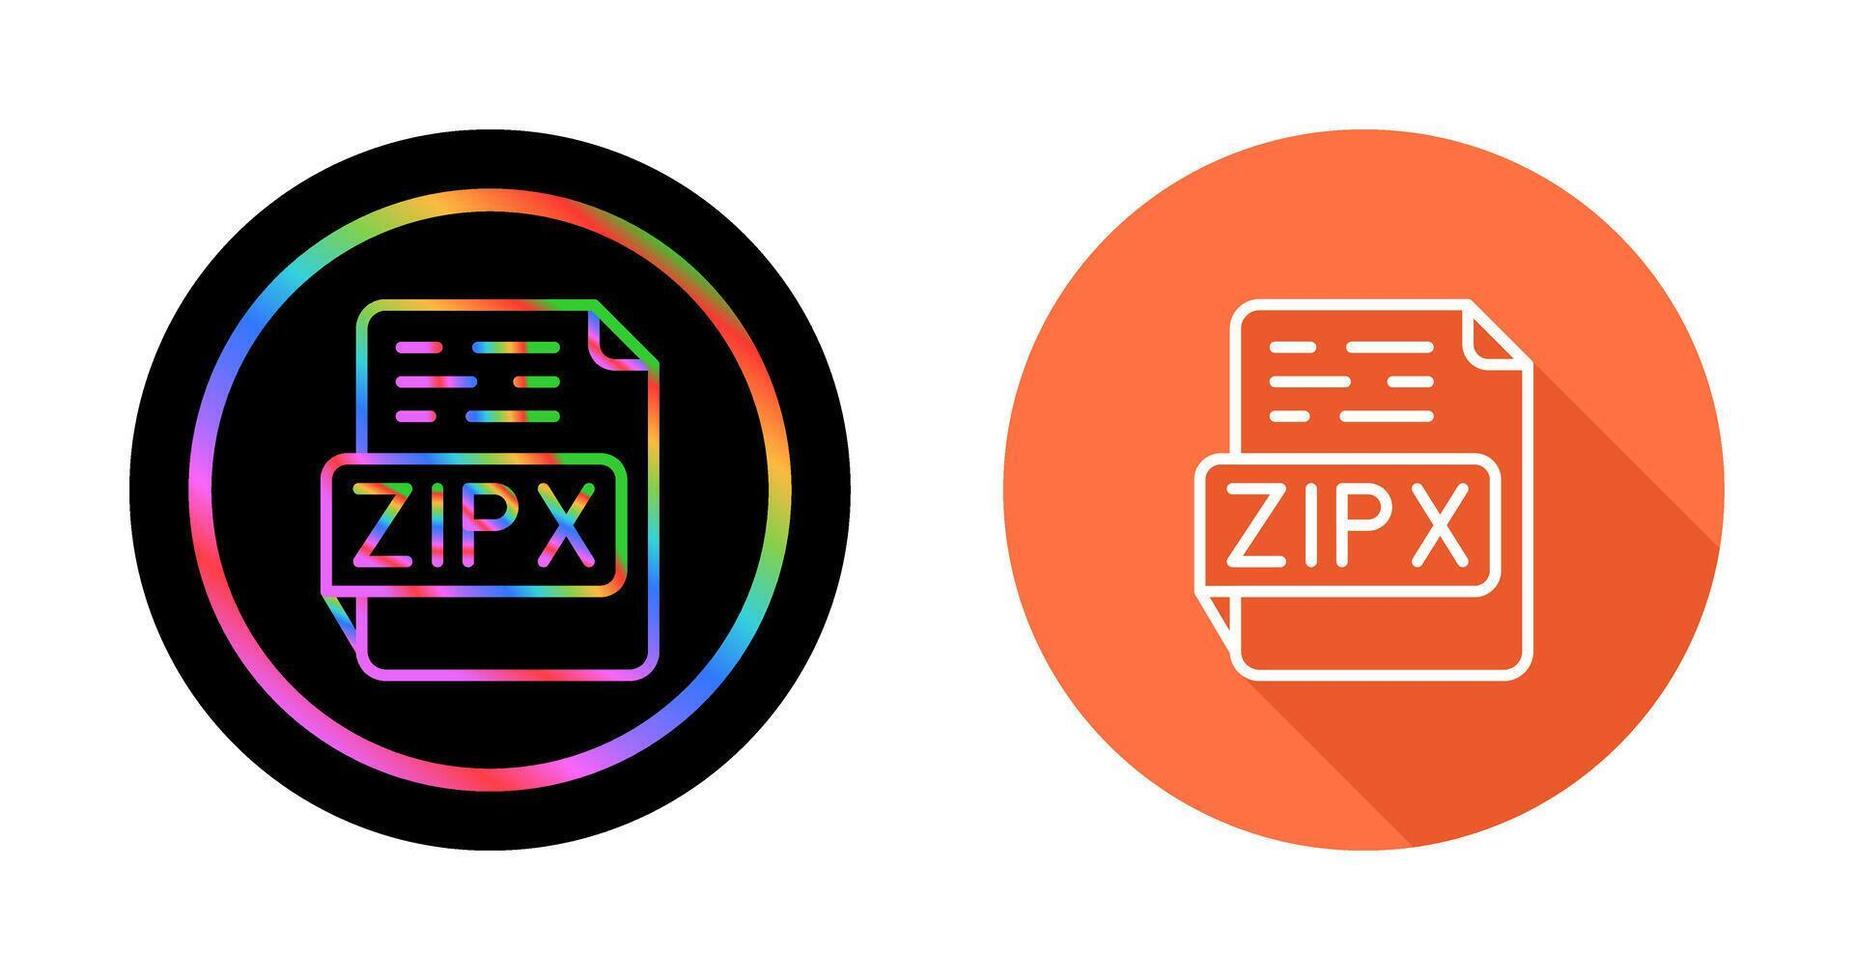 zipx vektor ikon